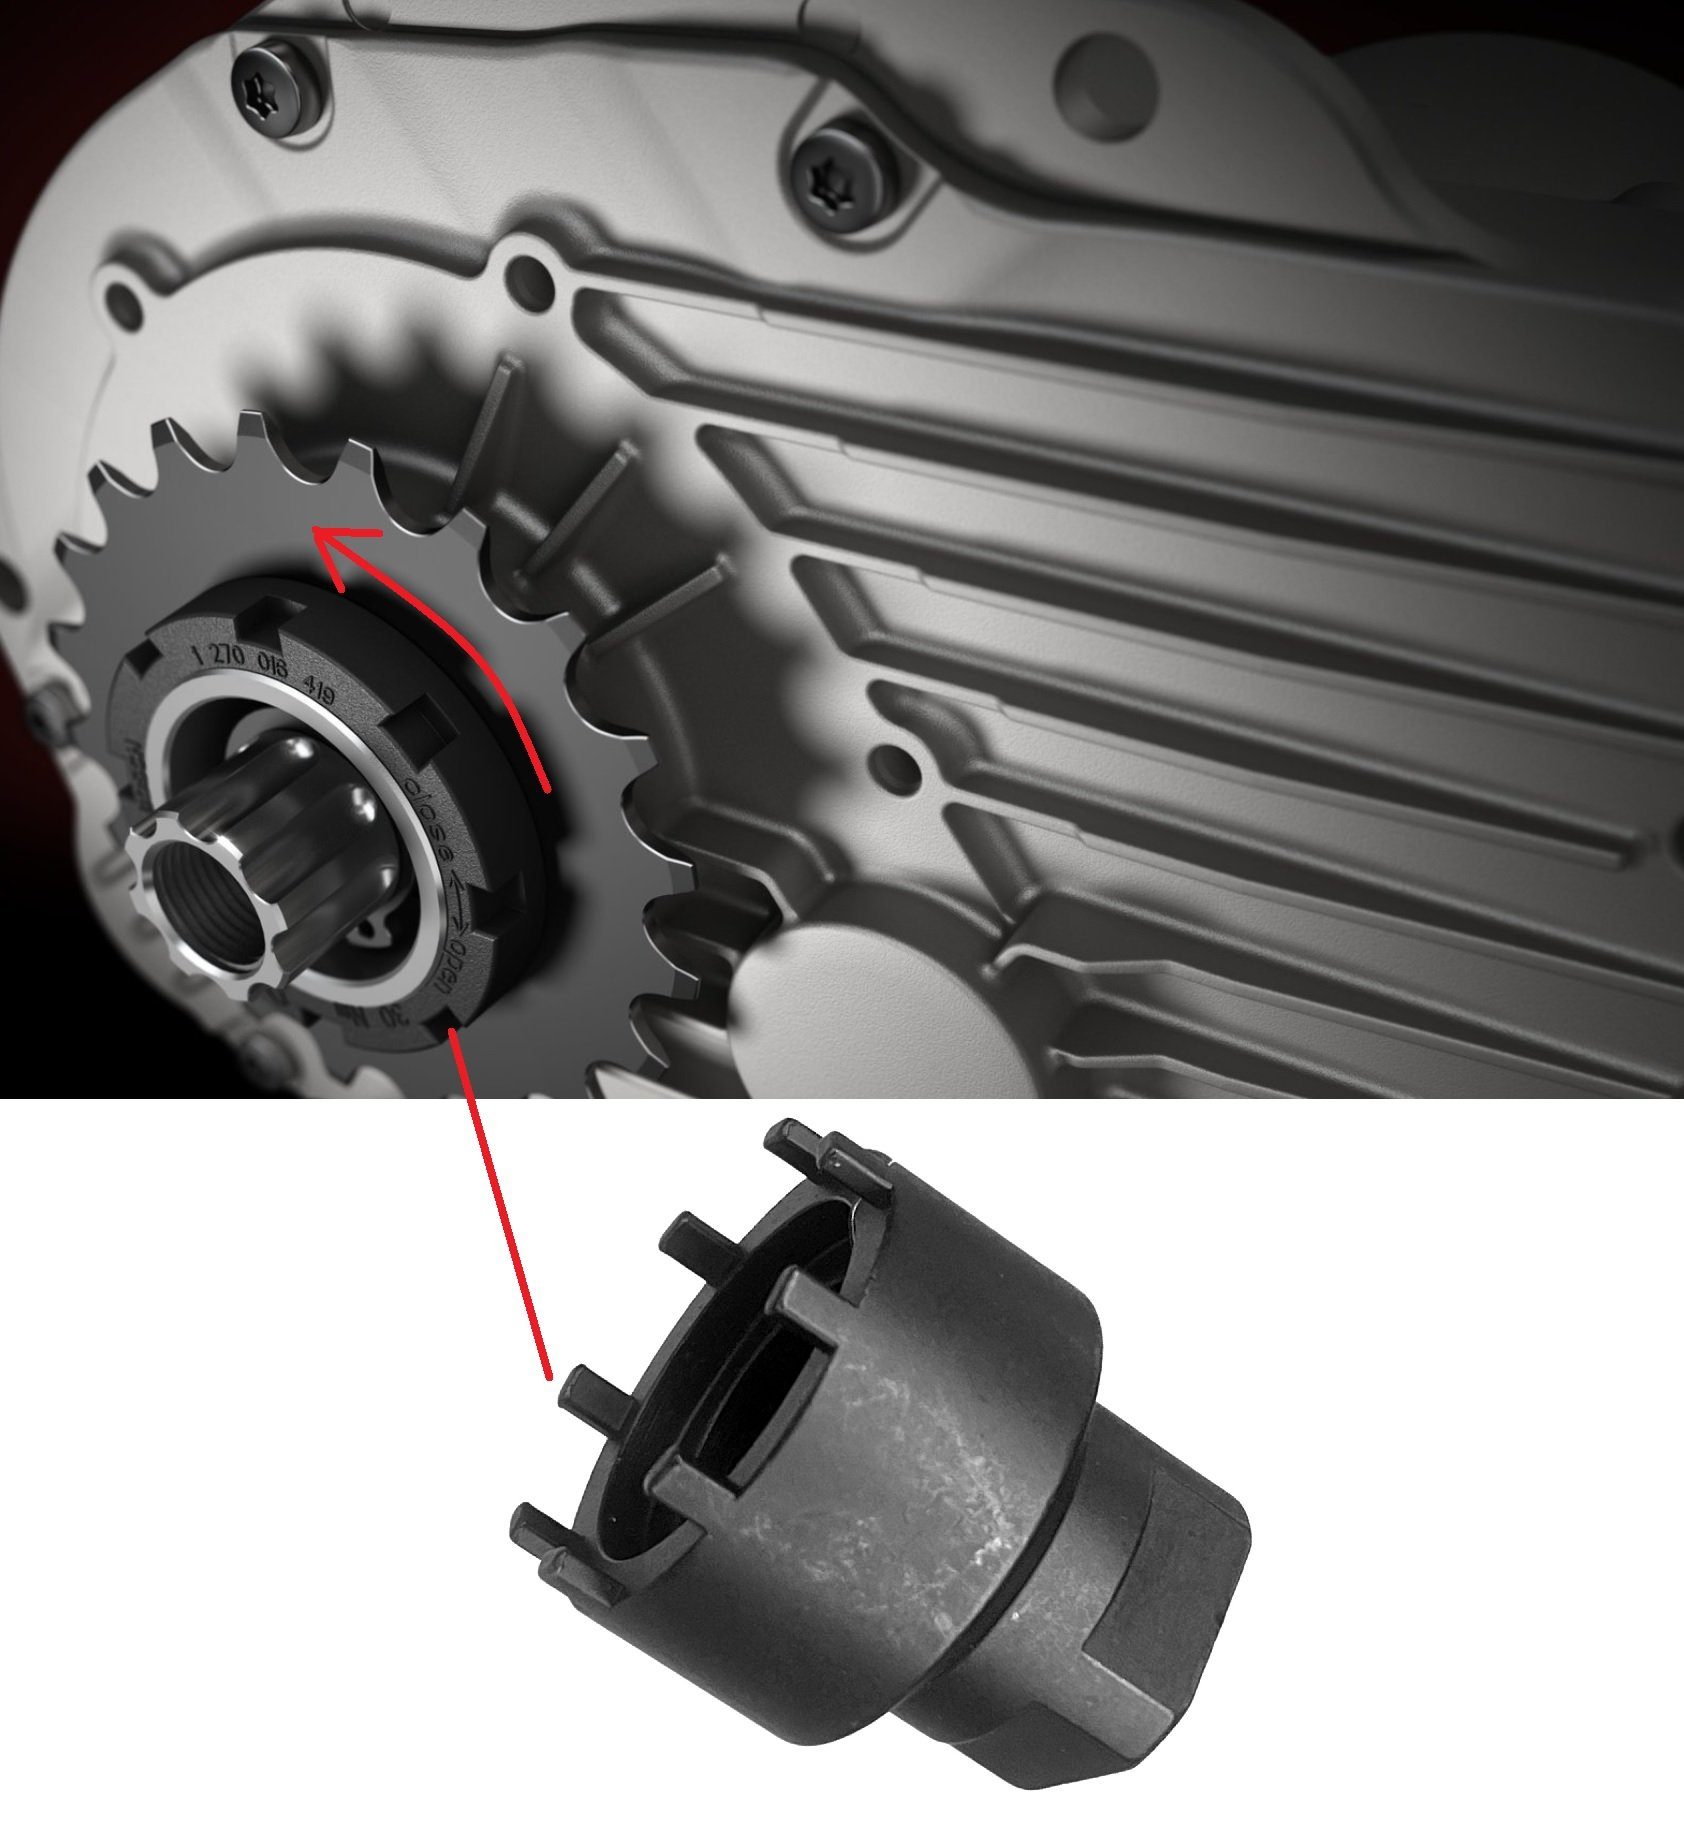 4, Nuss für Fahrrad-Montageständer Kettenblatt Bosch Gen F26 Performance Gen.3, Lockringtool CX